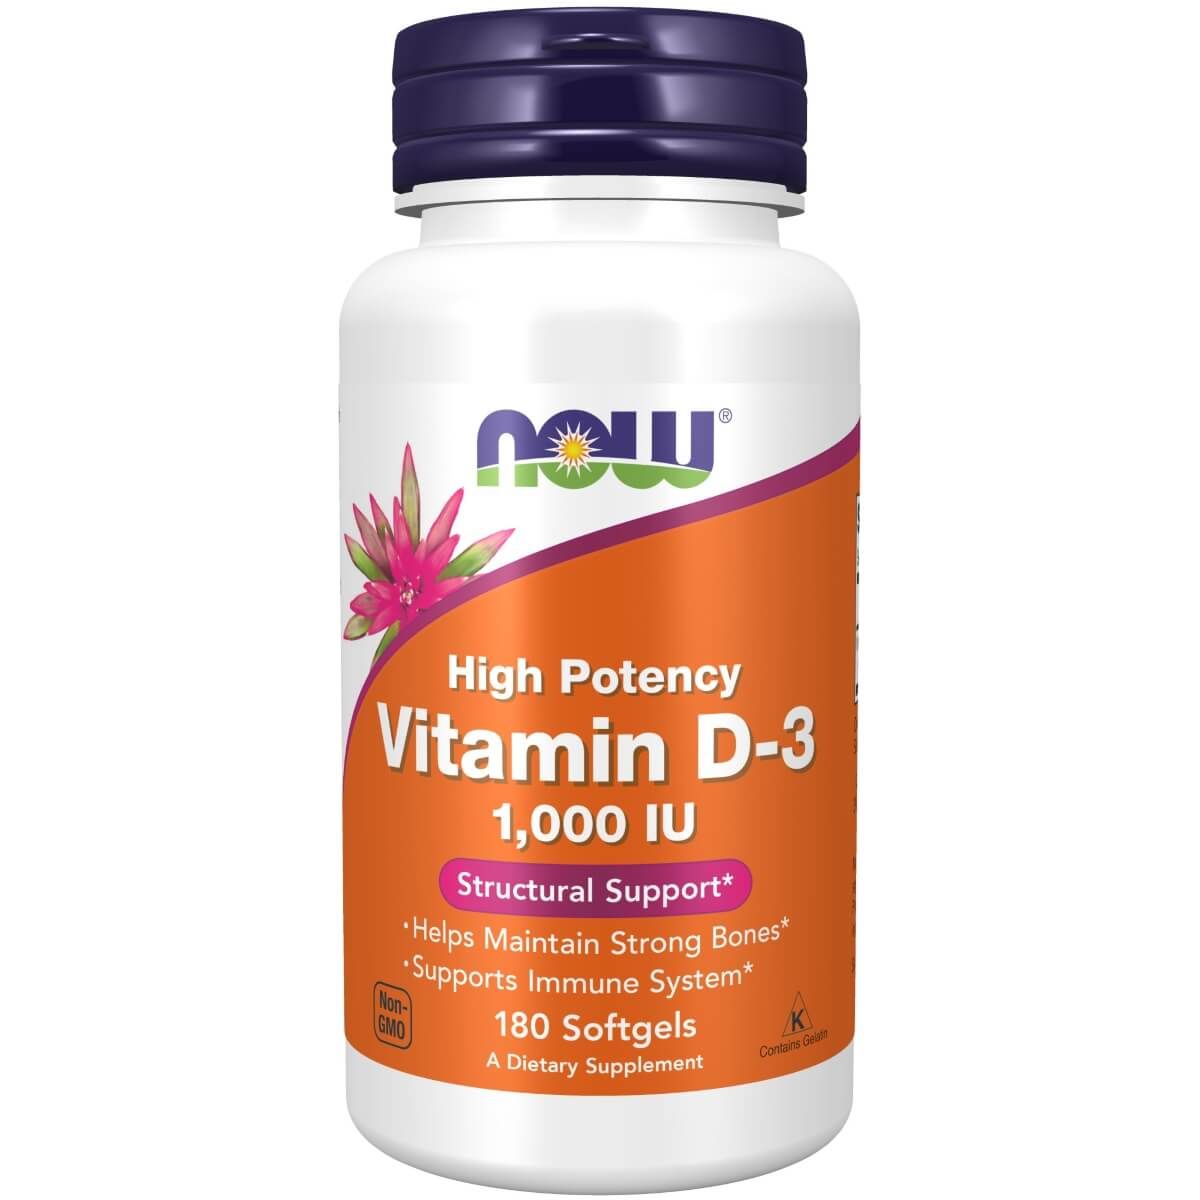 Vitamin D Product